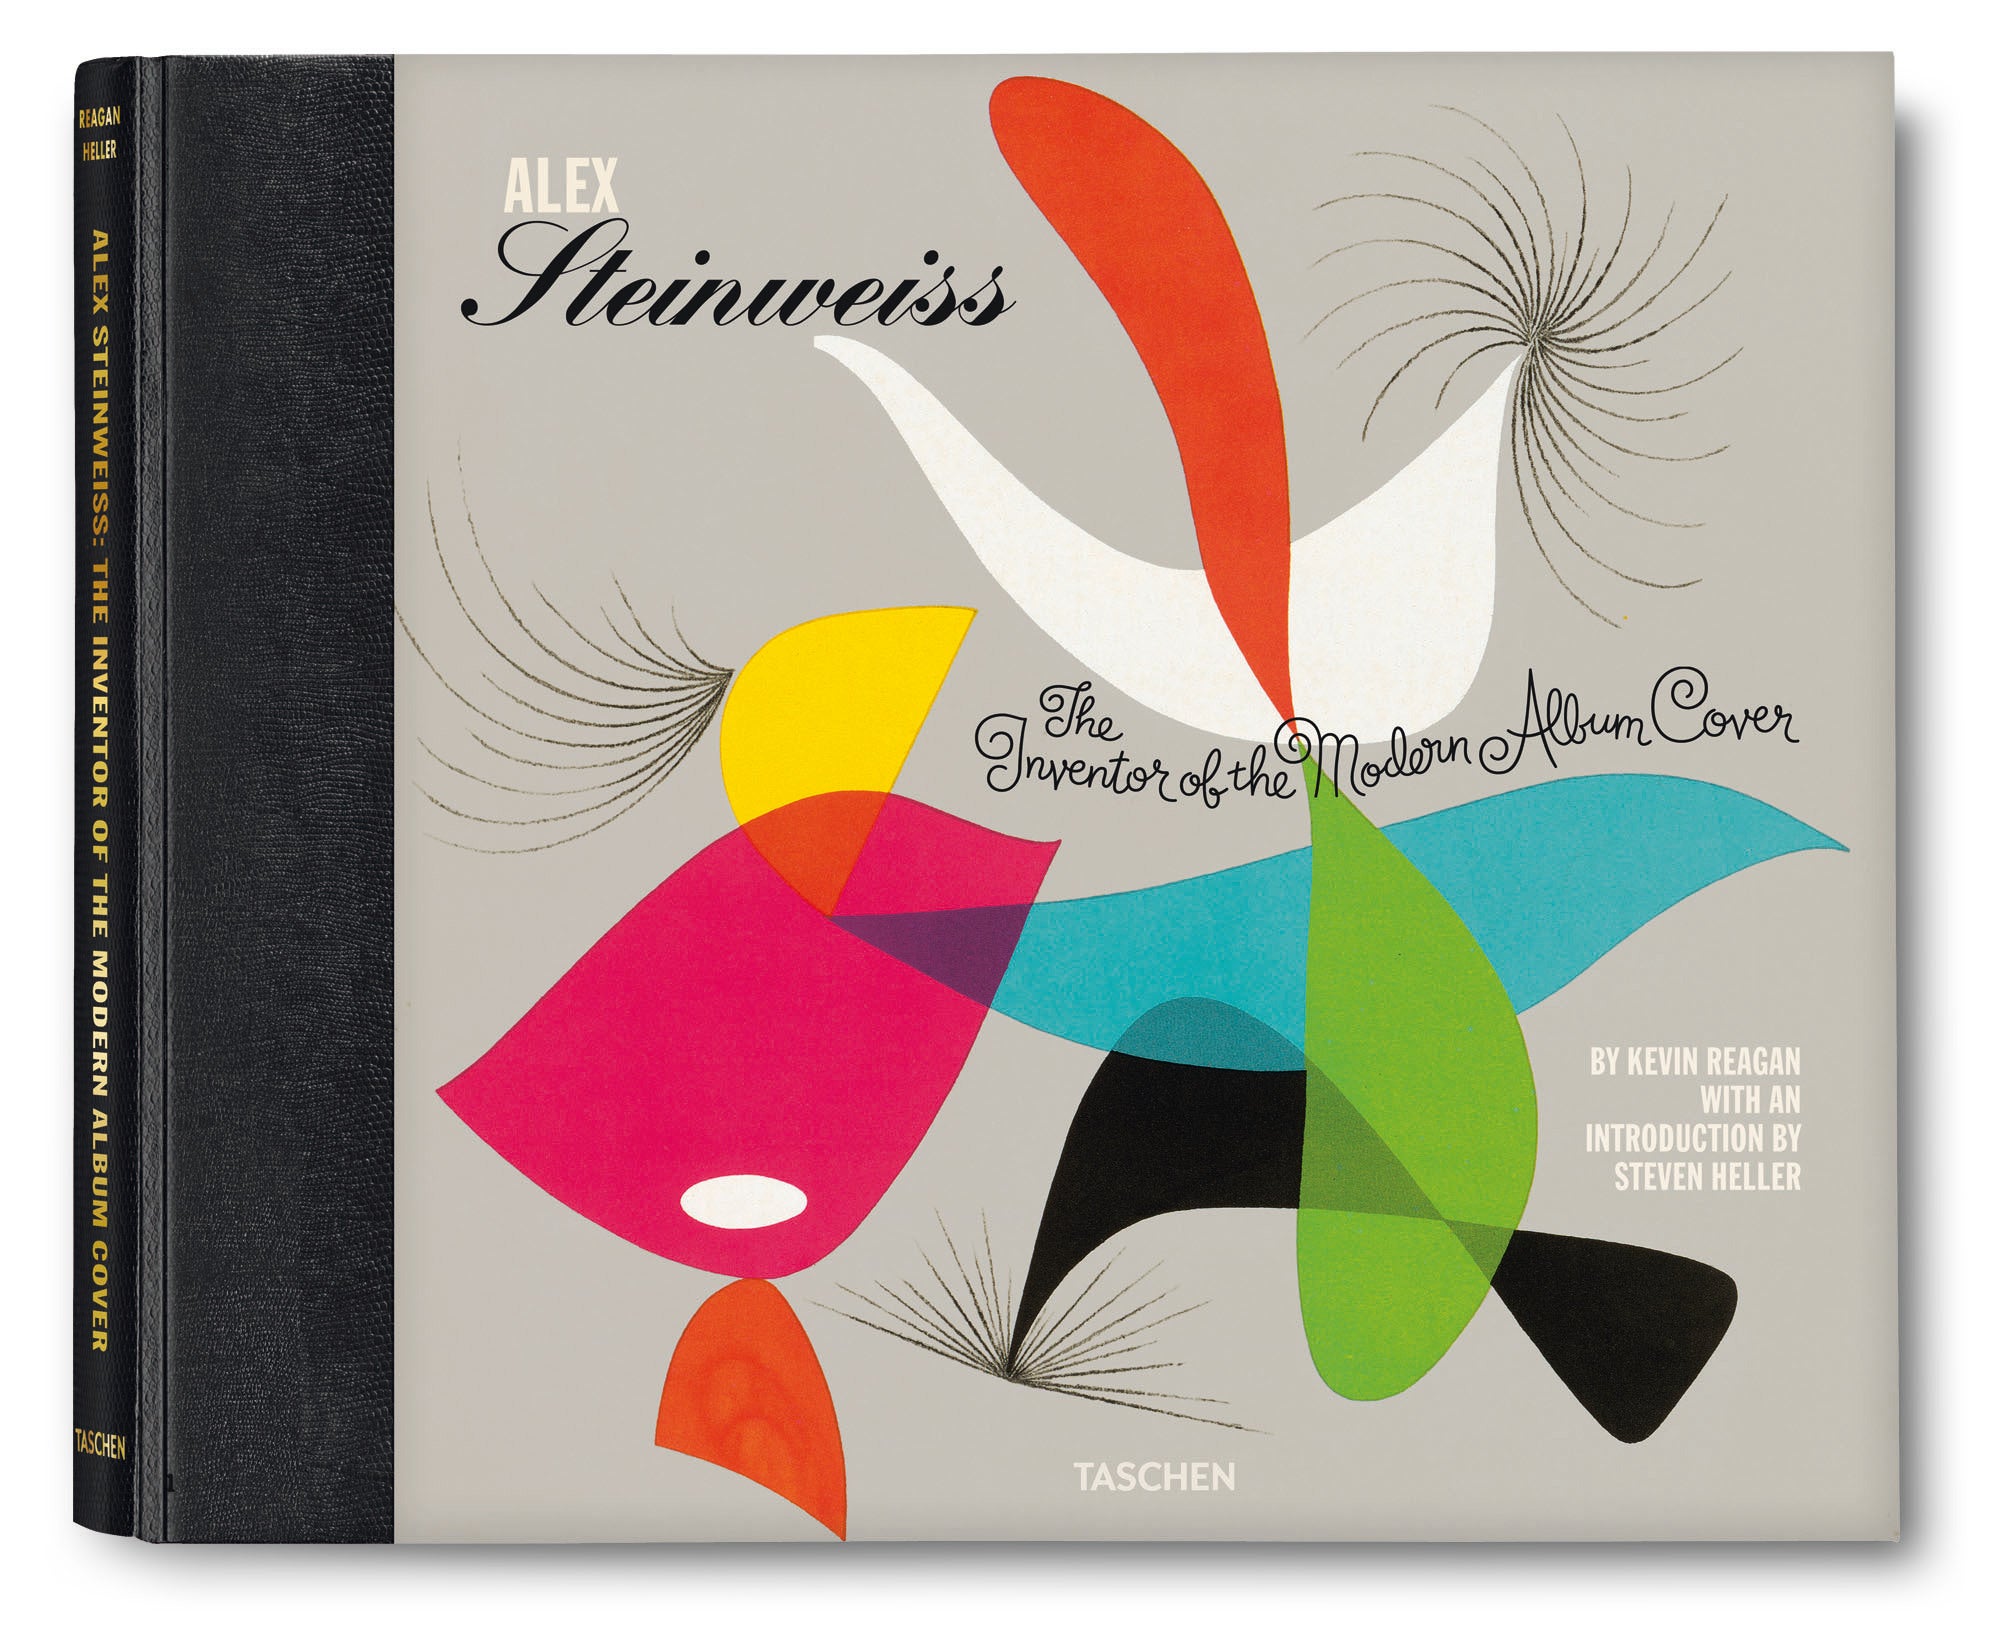 "Alex Steinweiss, The Inventor of the Modern Album Cover" Book